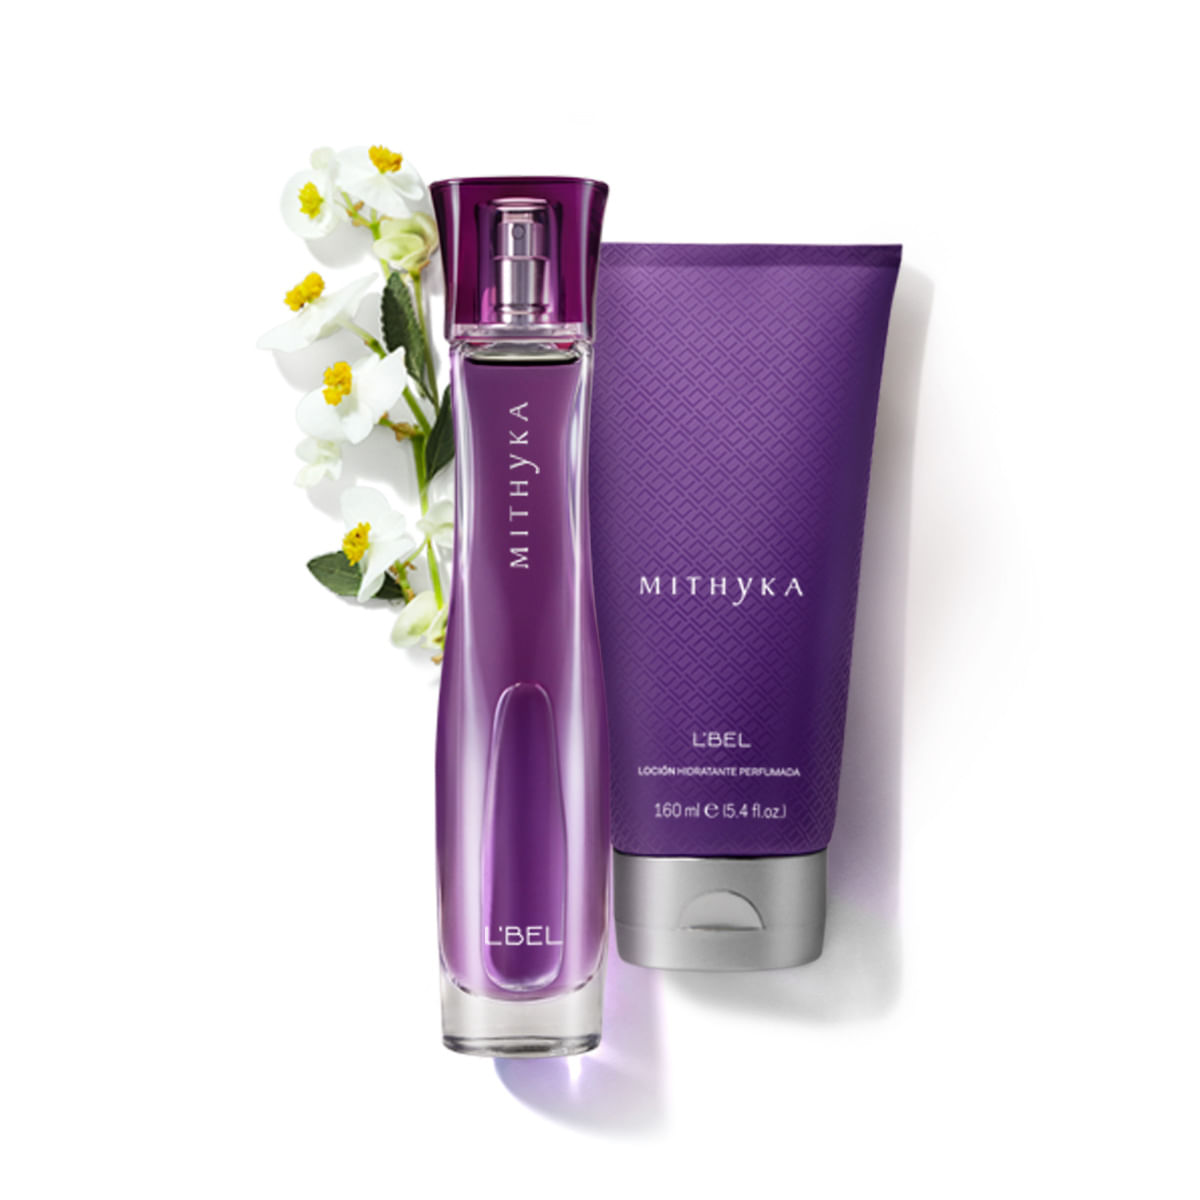 L'Bel - Mithyka Women's Perfume Long Lasting 50 ml Size